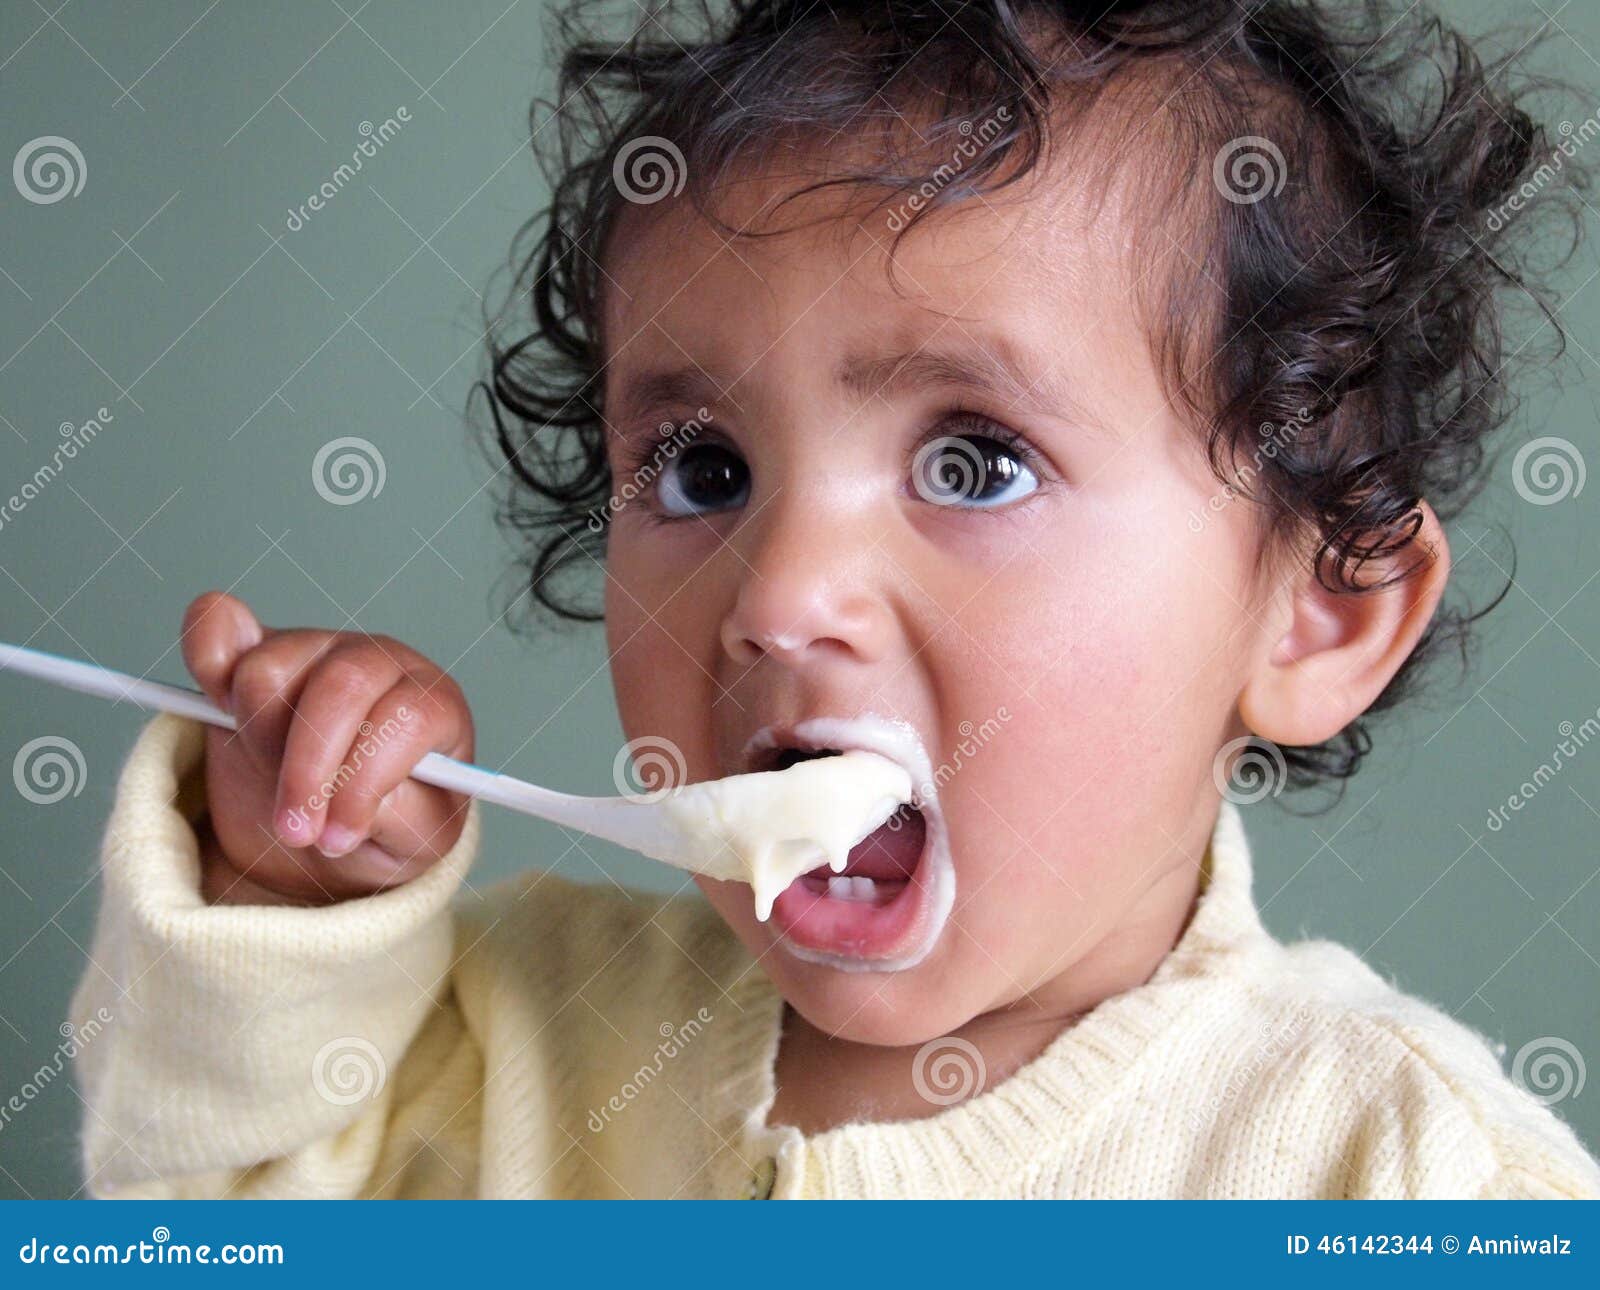 Toddler Girl Feeding Herself With A Spoon Of Porridge Stock Ph